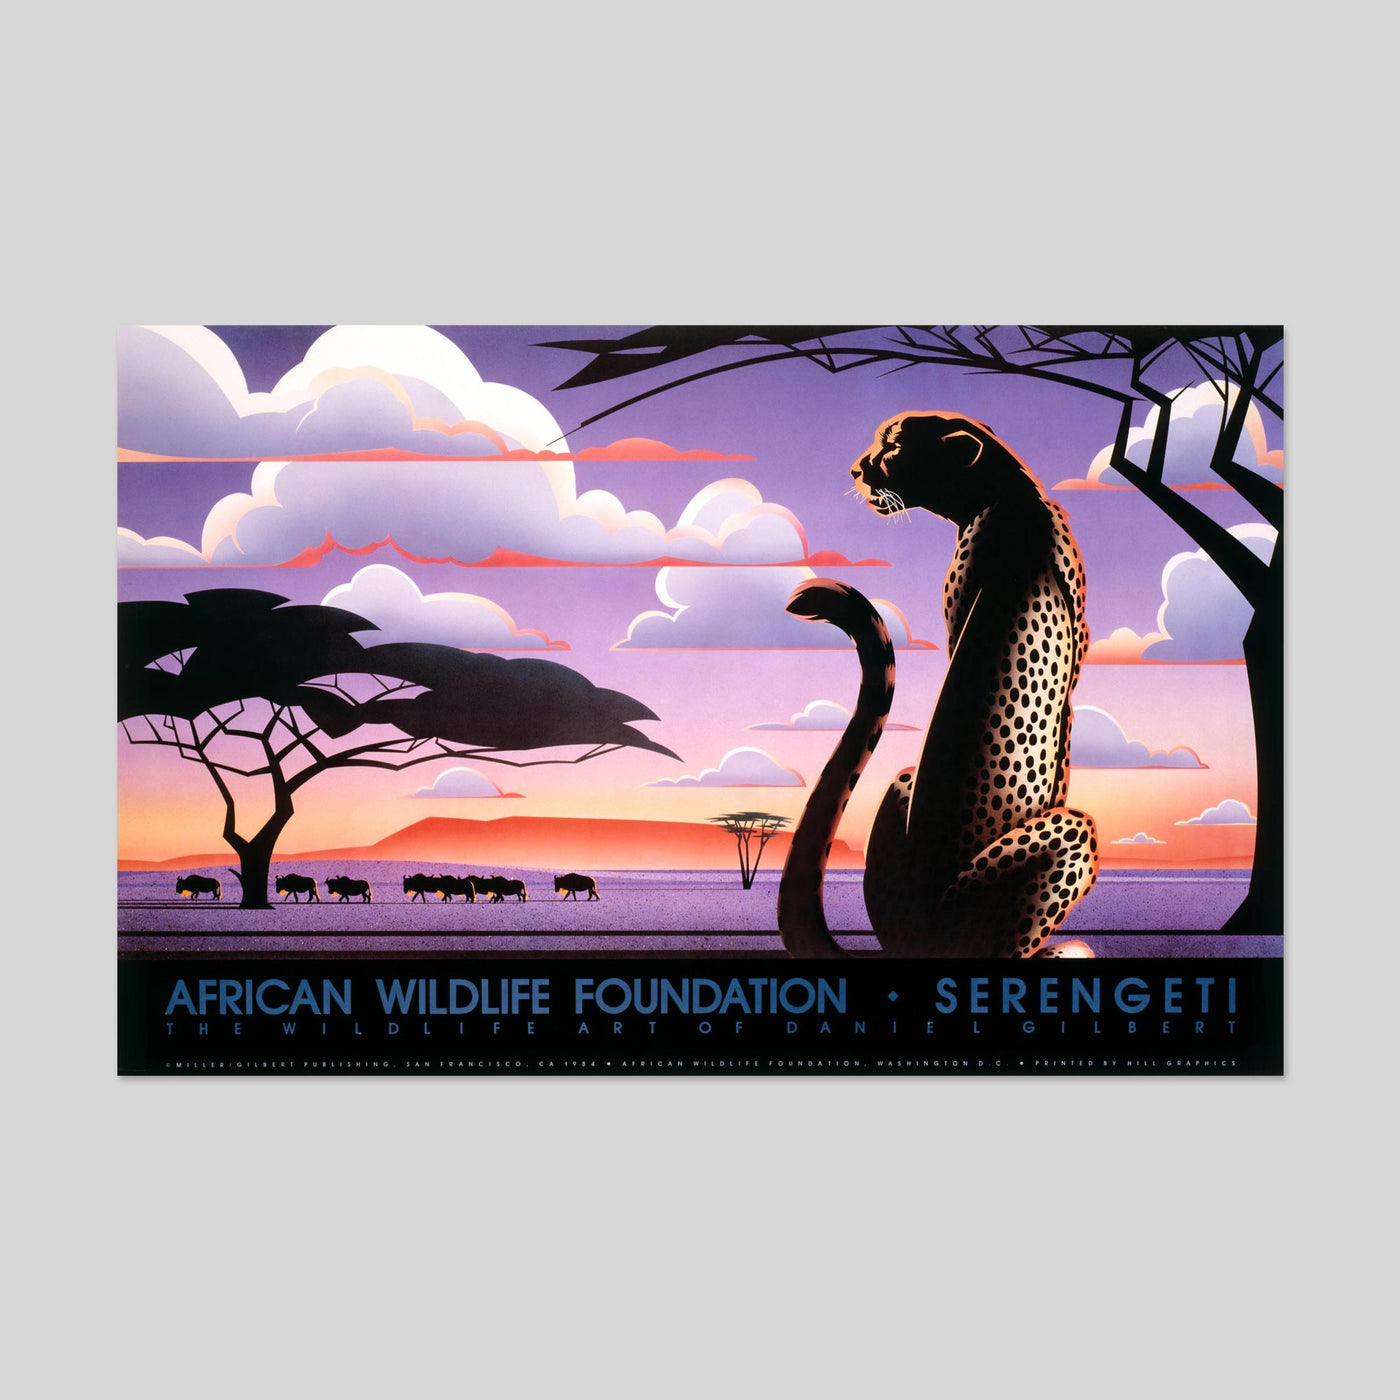 Limited Edition Serengeti Cheetah Poster by Dan Gilbert - African Wildlife Foundation - Cheetah and Baobab Tree